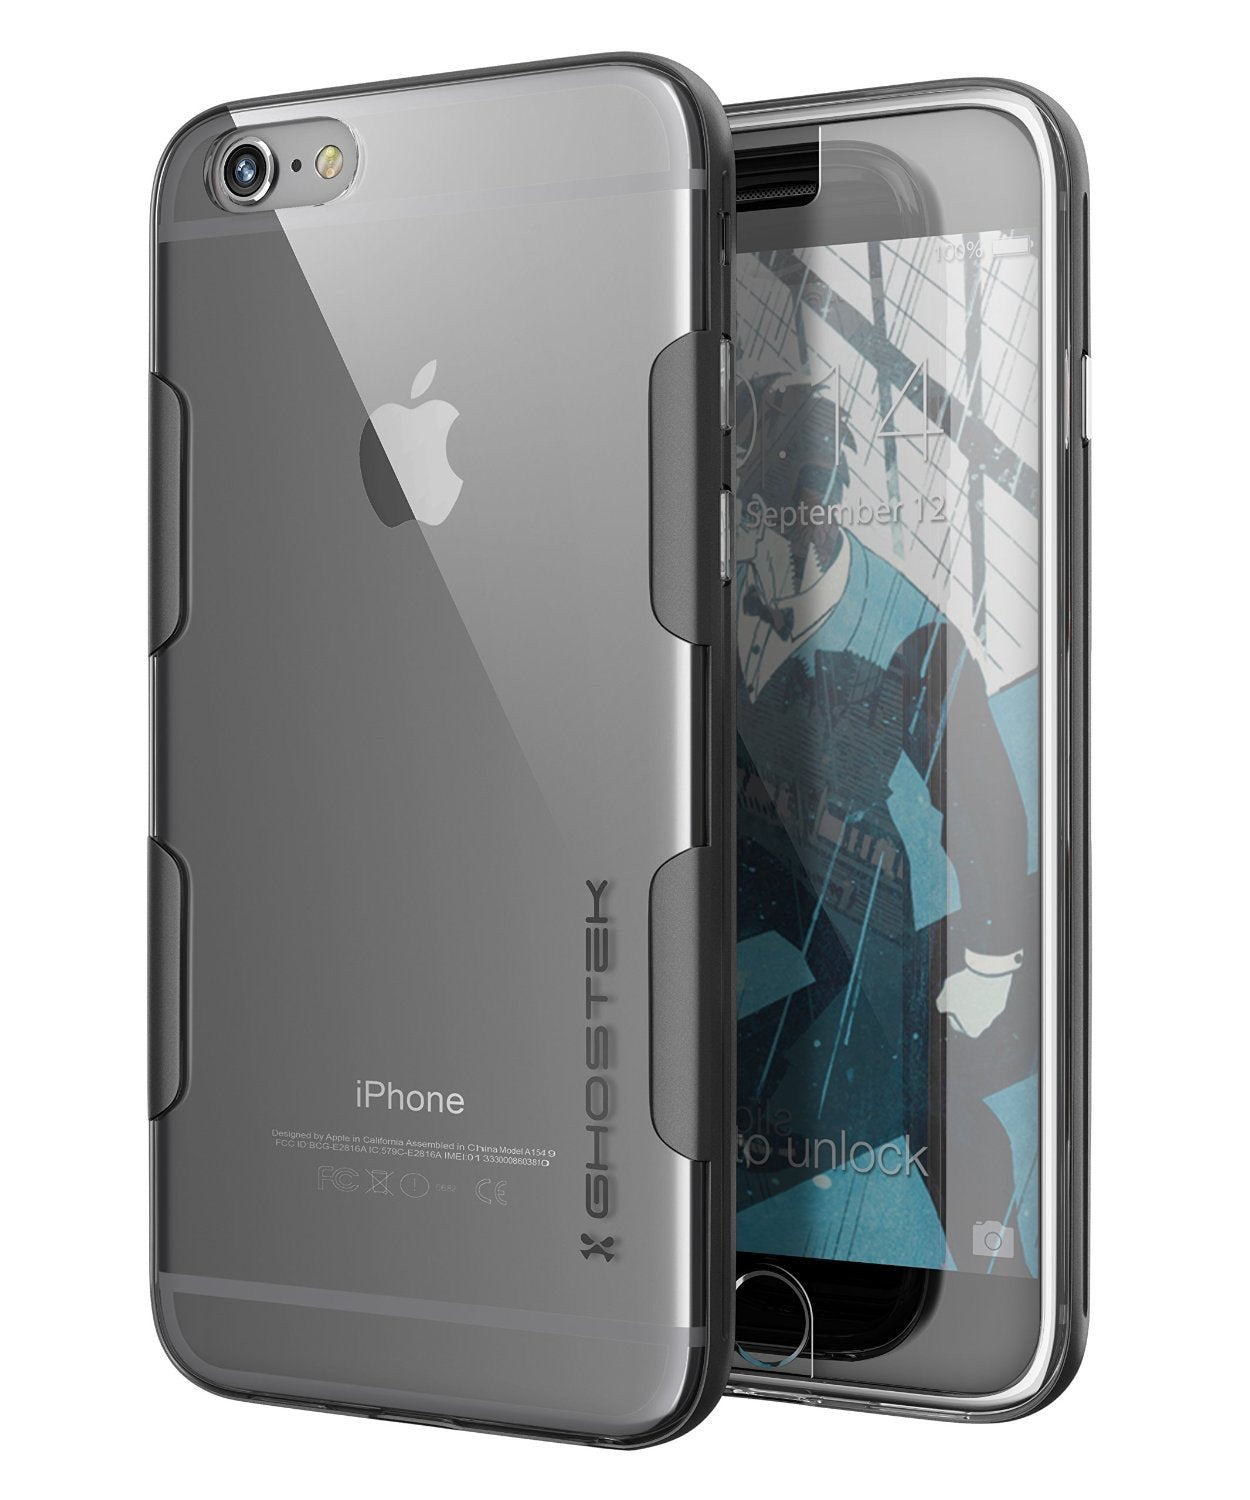 iPhone 6s Plus Case Space Grey Ghostek Cloak, Slim Protective w/ Tempered Glass | Lifetime Warranty